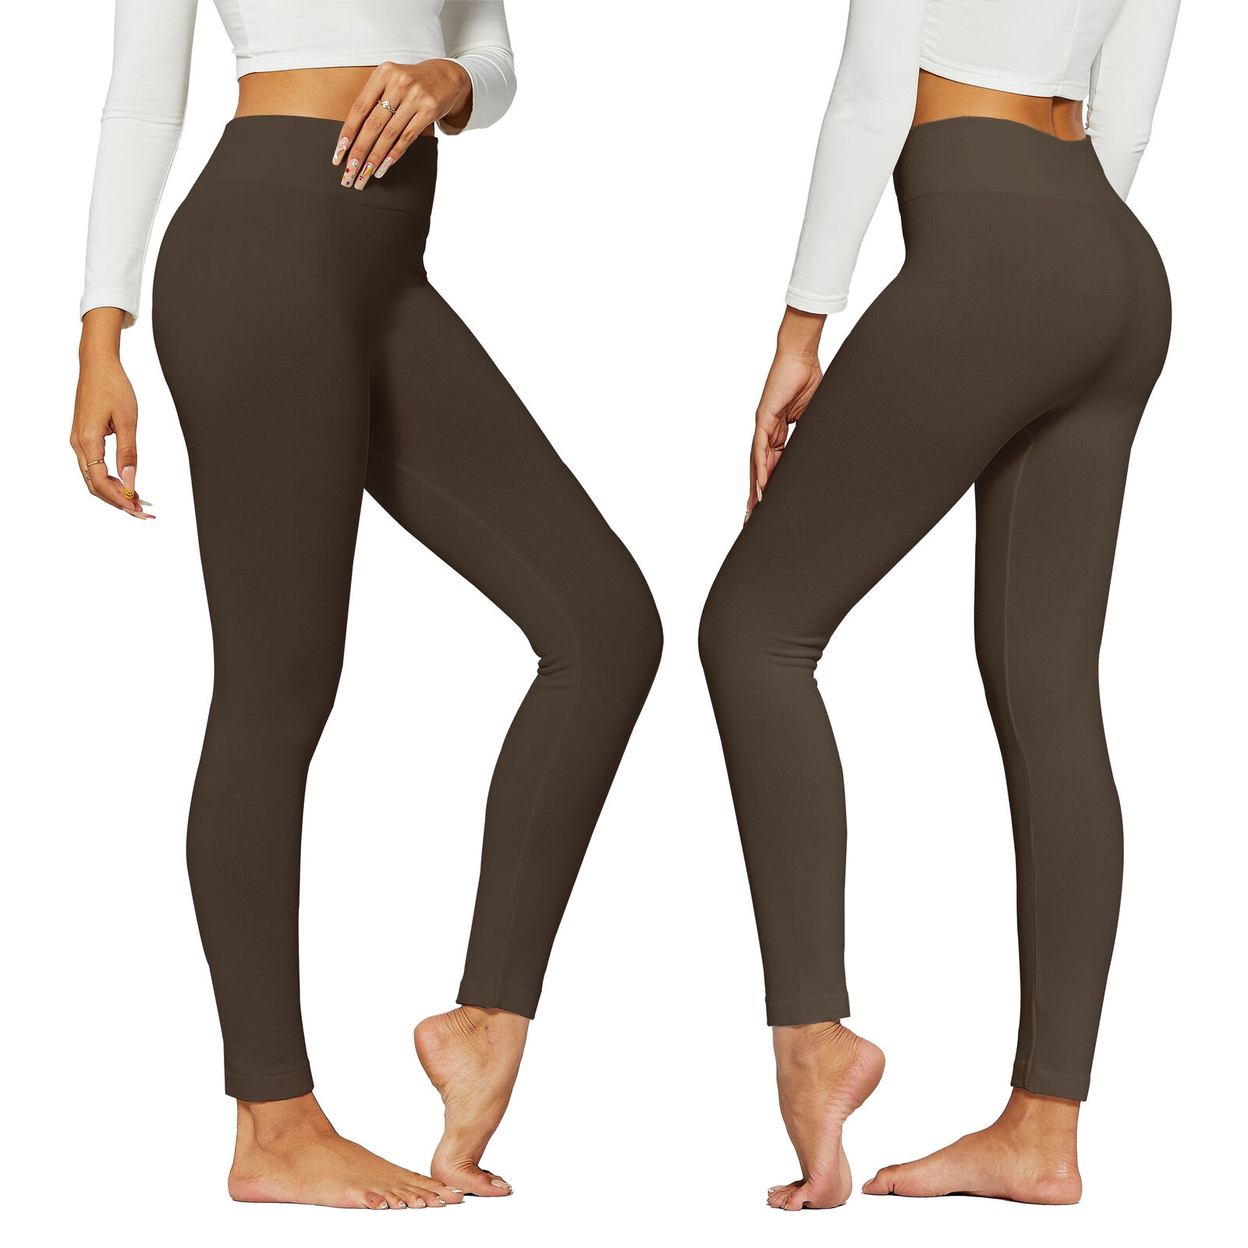 2-Pack: Women's Winter Warm High-Waist Soft Fleece Lined Leggings - Black & Brown, X-Large